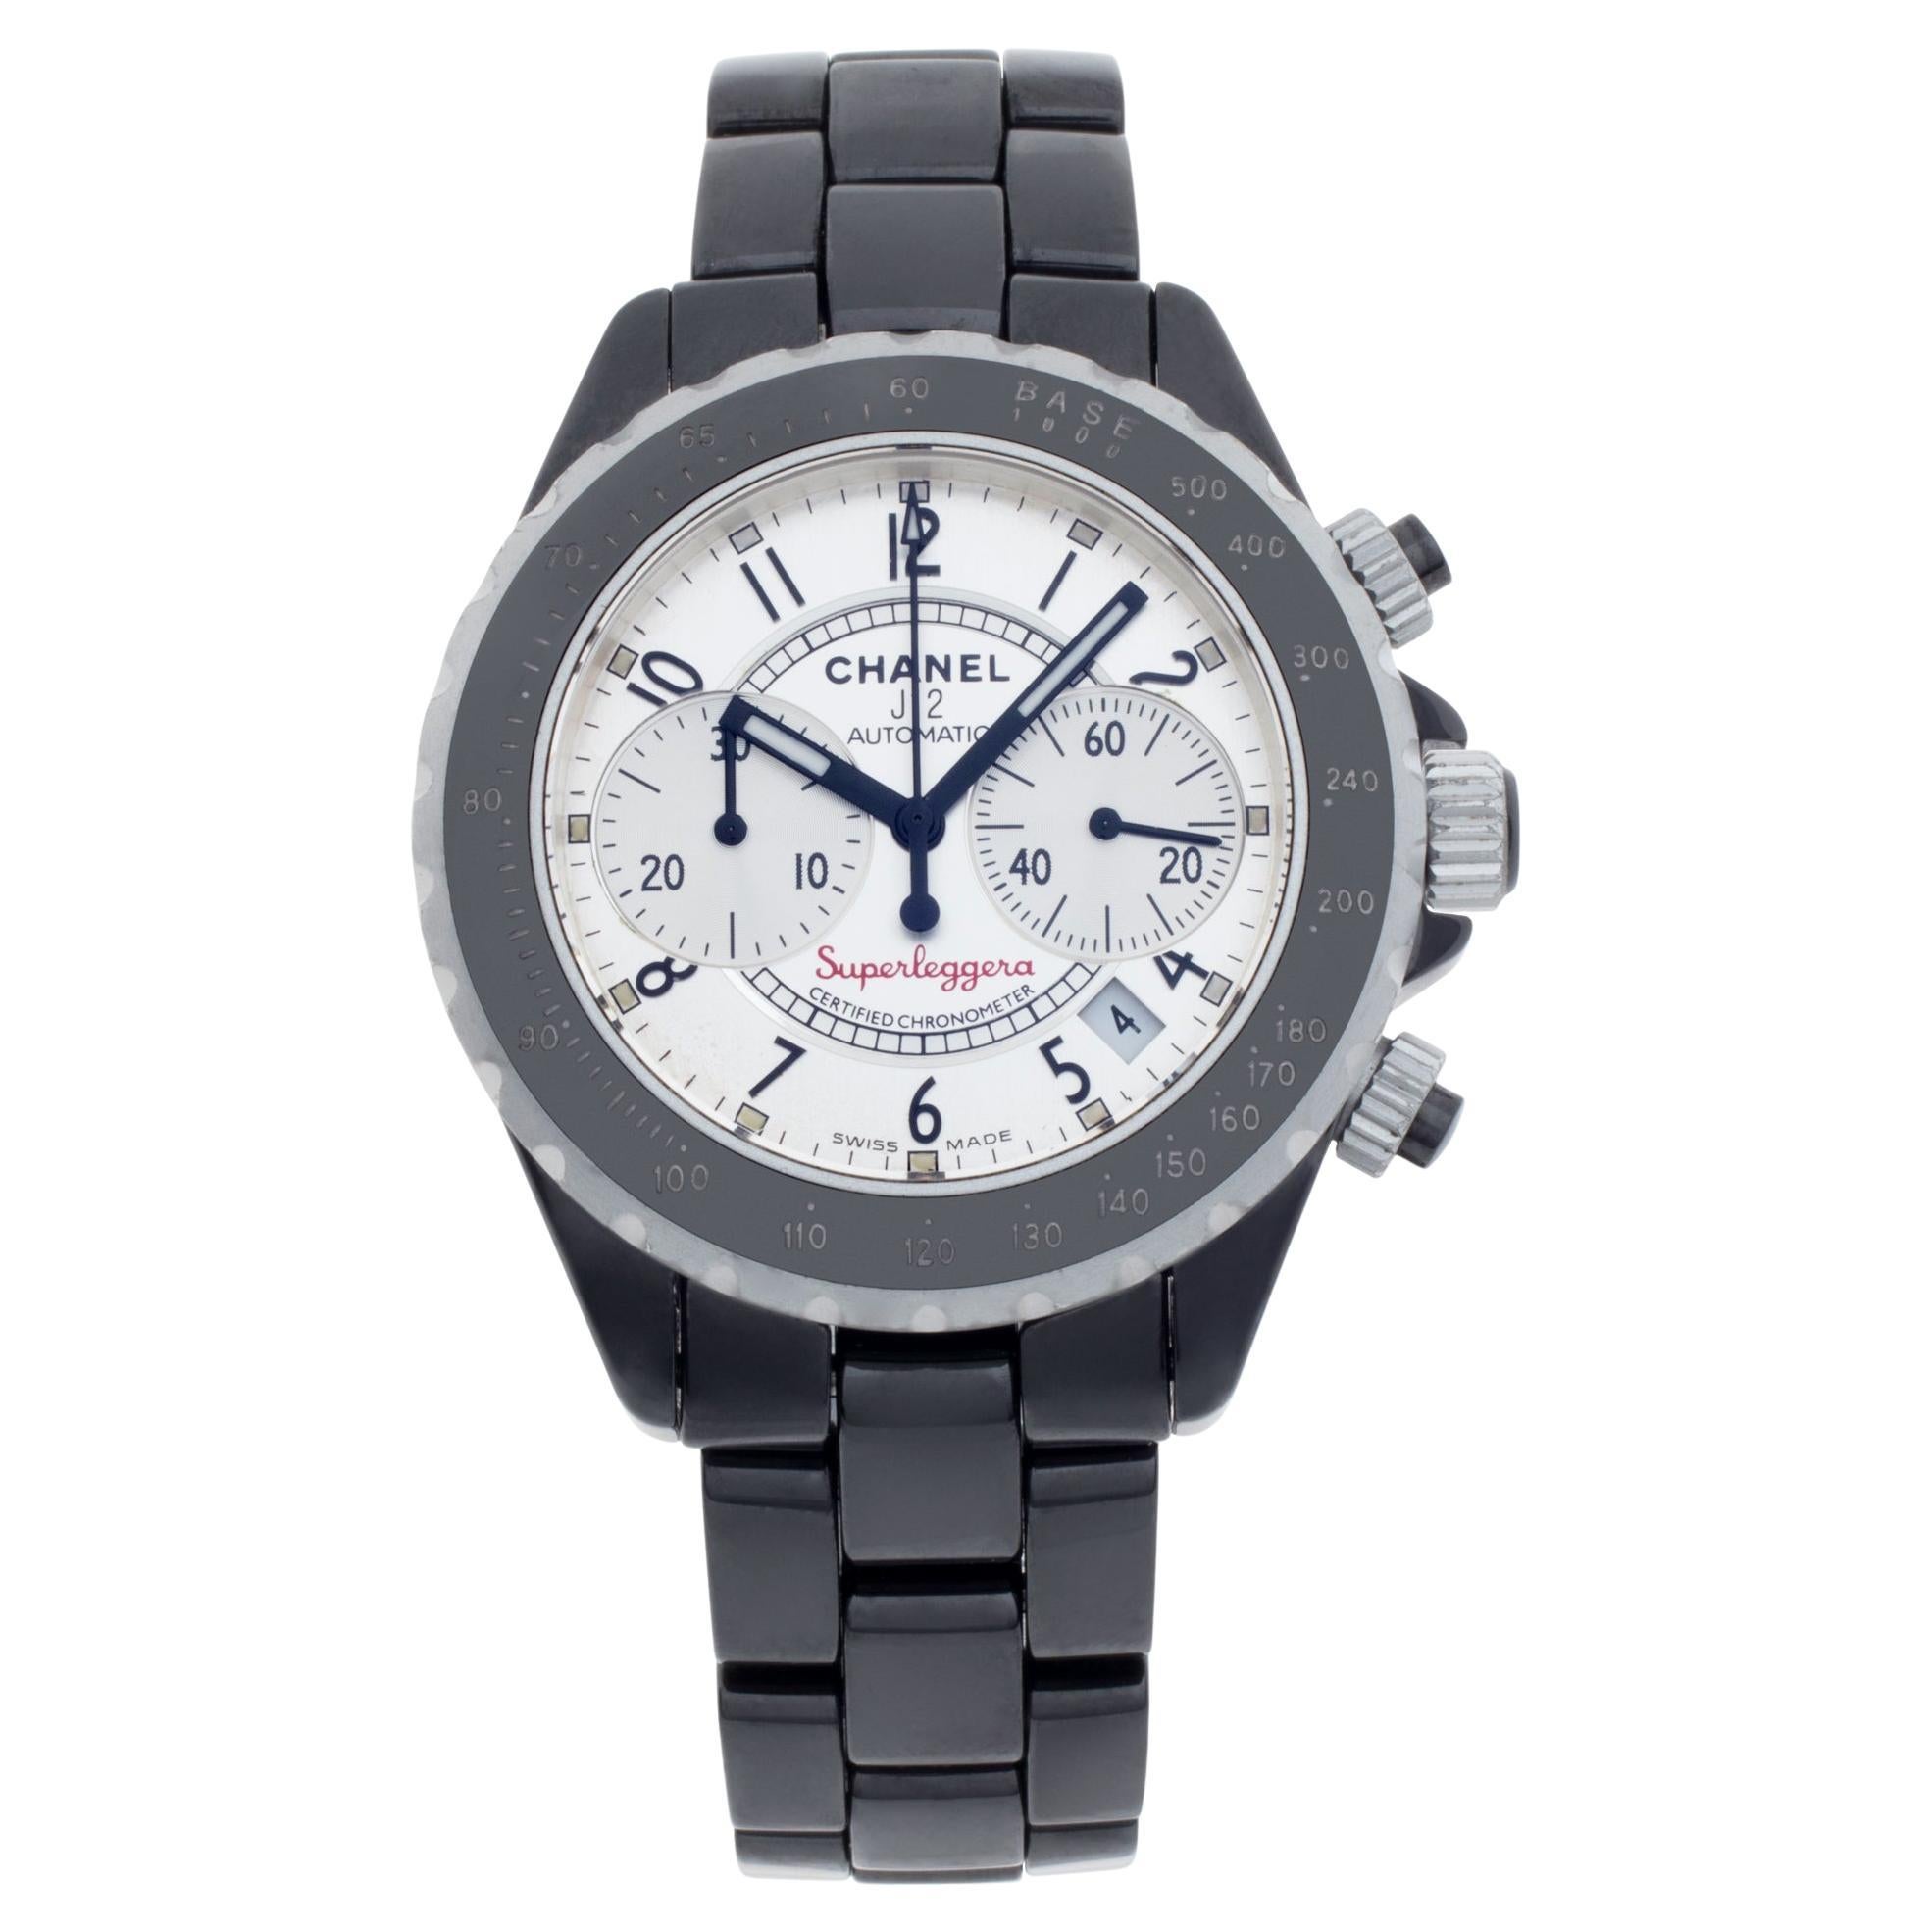 Chanel Superleggera Watch - For Sale on 1stDibs  chanel watch z.g.58096  price, chanel j12 superleggera watch, chanel watch zg 58096